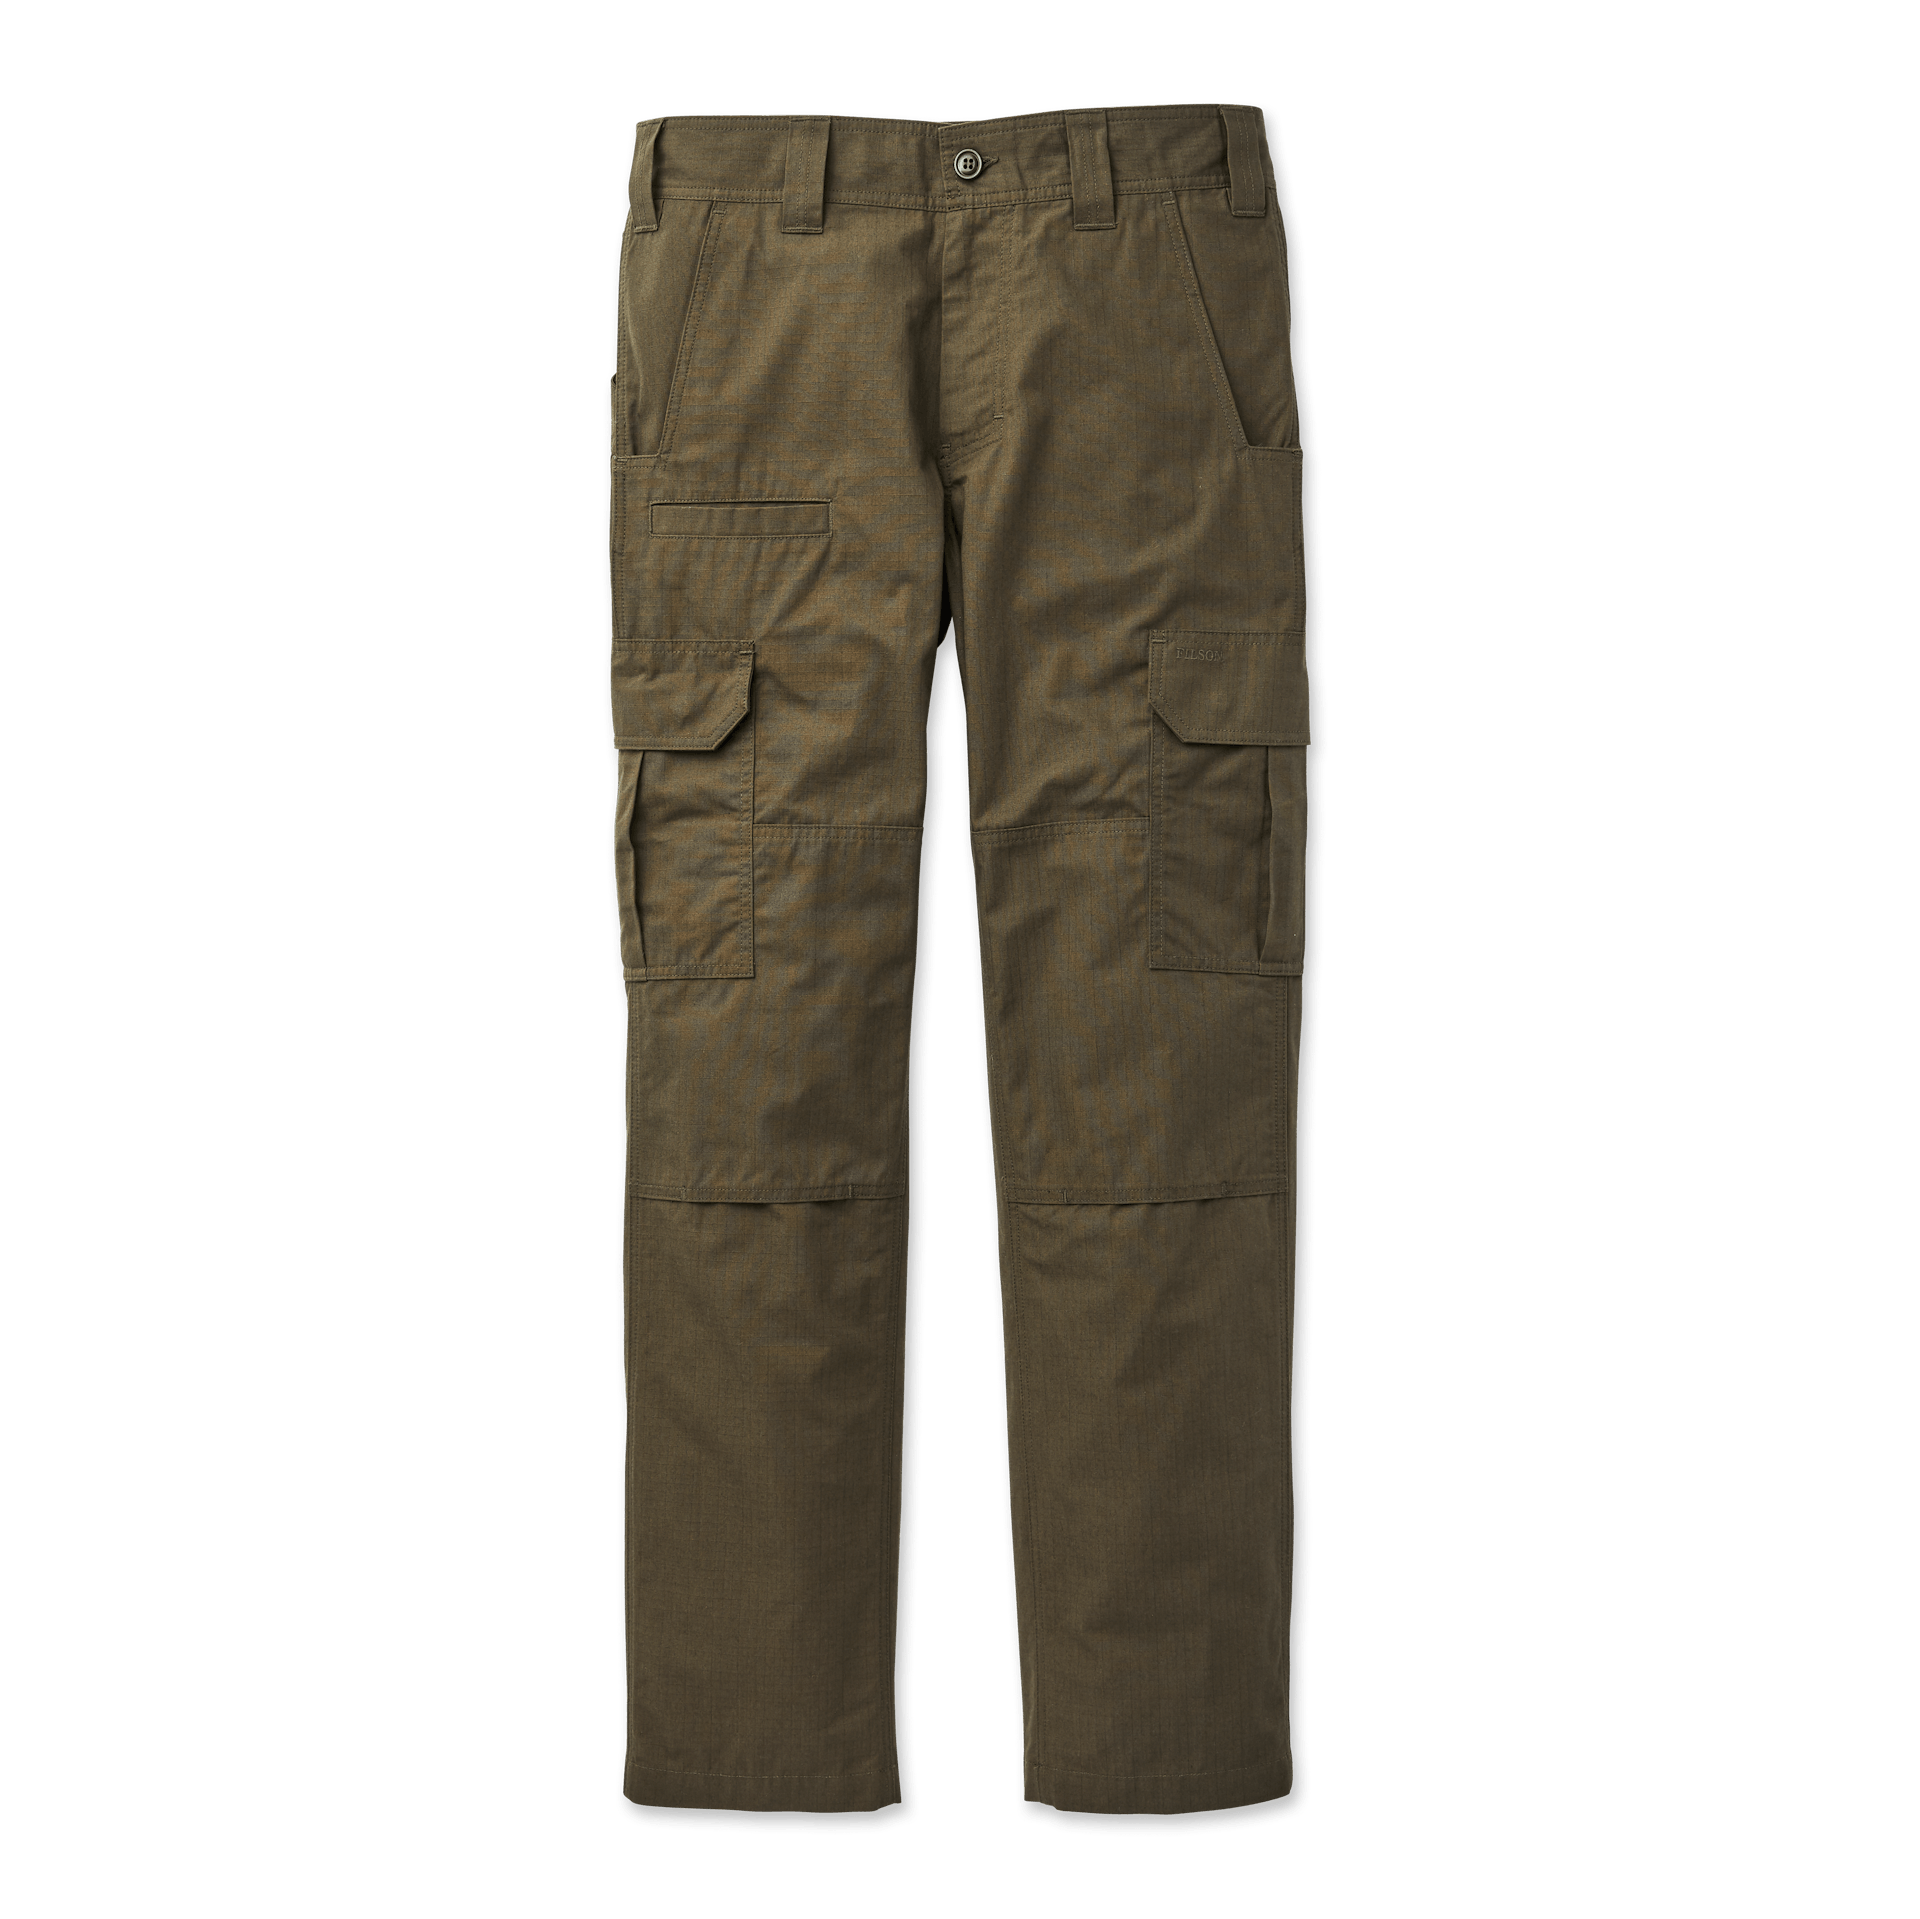 gray cargo pants